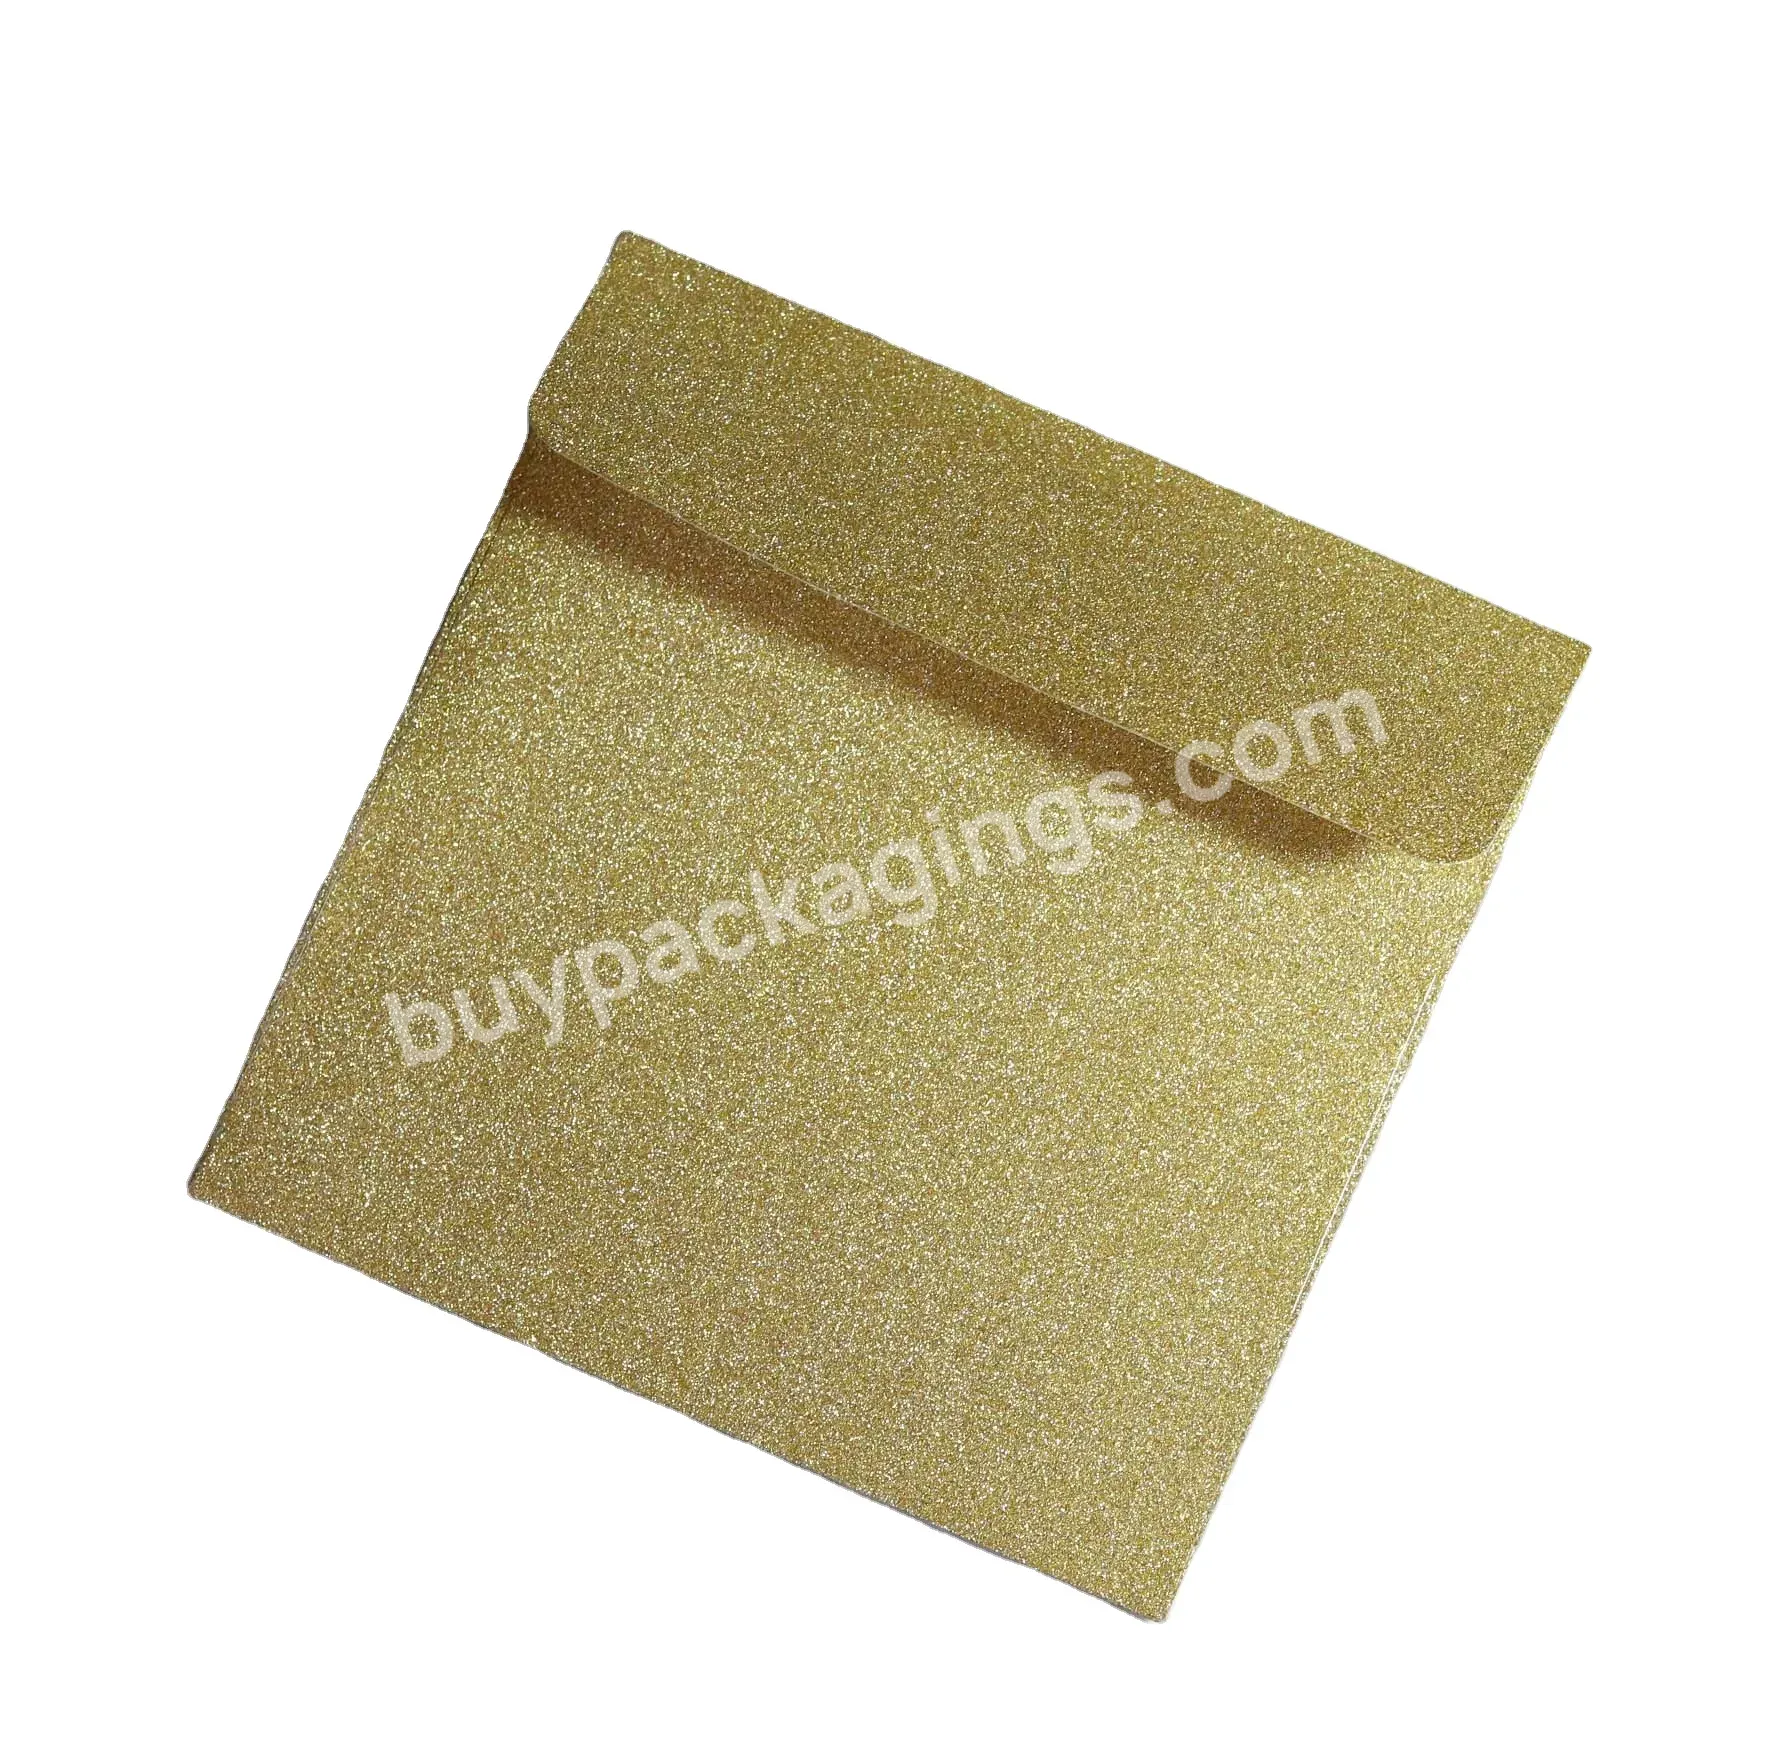 Luxury Gold Envelope Logo Design Wedding Packaging Paper Envelopes Decoration Wedding Invitation Envelope Card